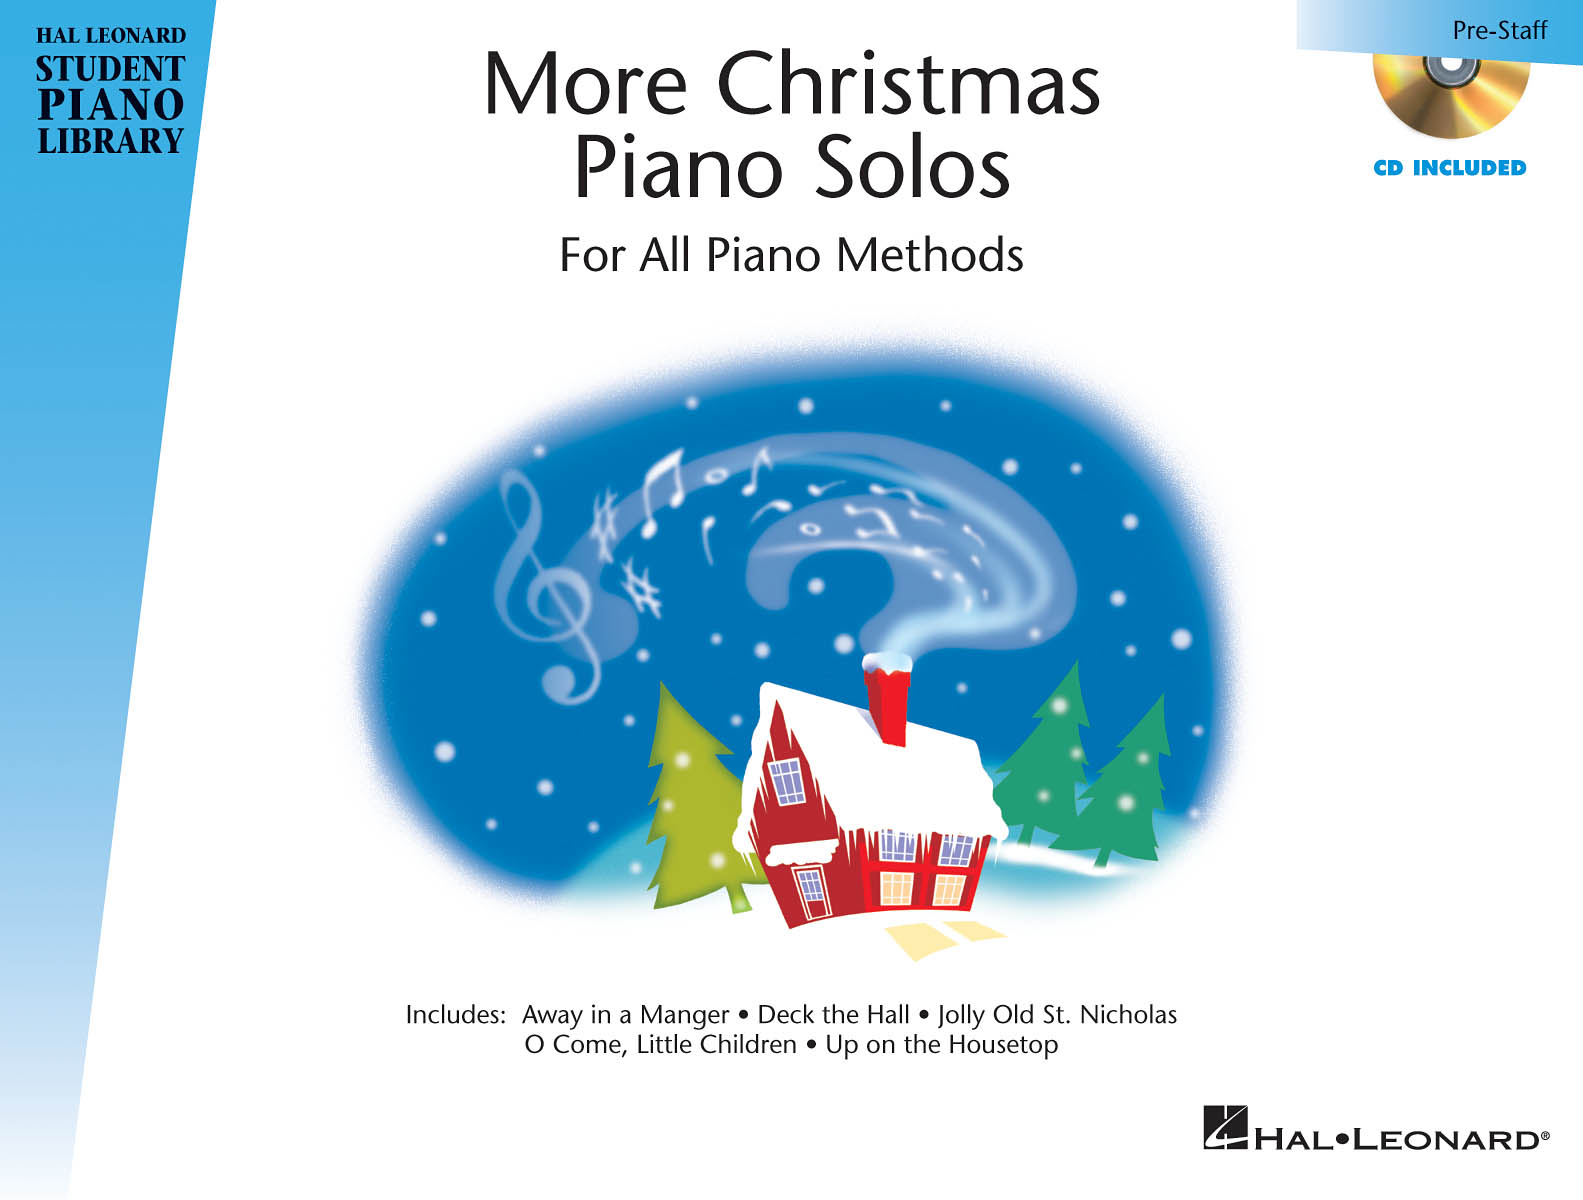 More Christmas Piano Solos - Prestaff Level - Hal Leonard Student Piano Library - vánoční melodie pro klavír